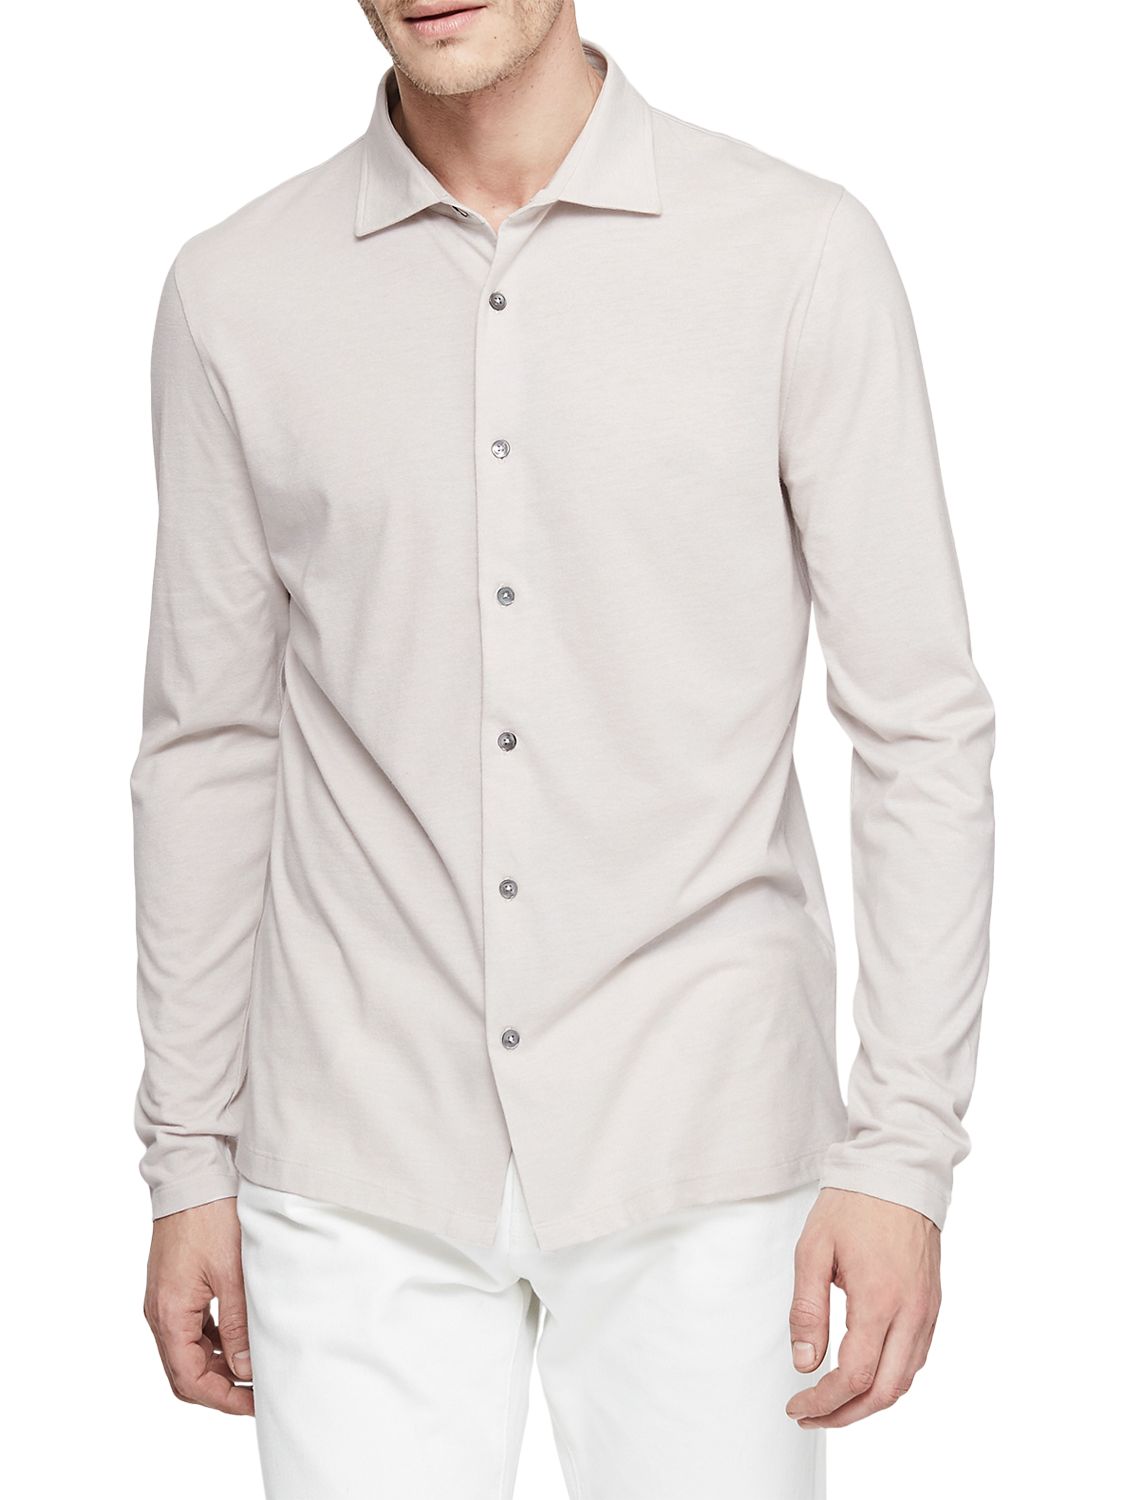 Reiss Oliver Jersey Shirt, Soft Grey, XXL